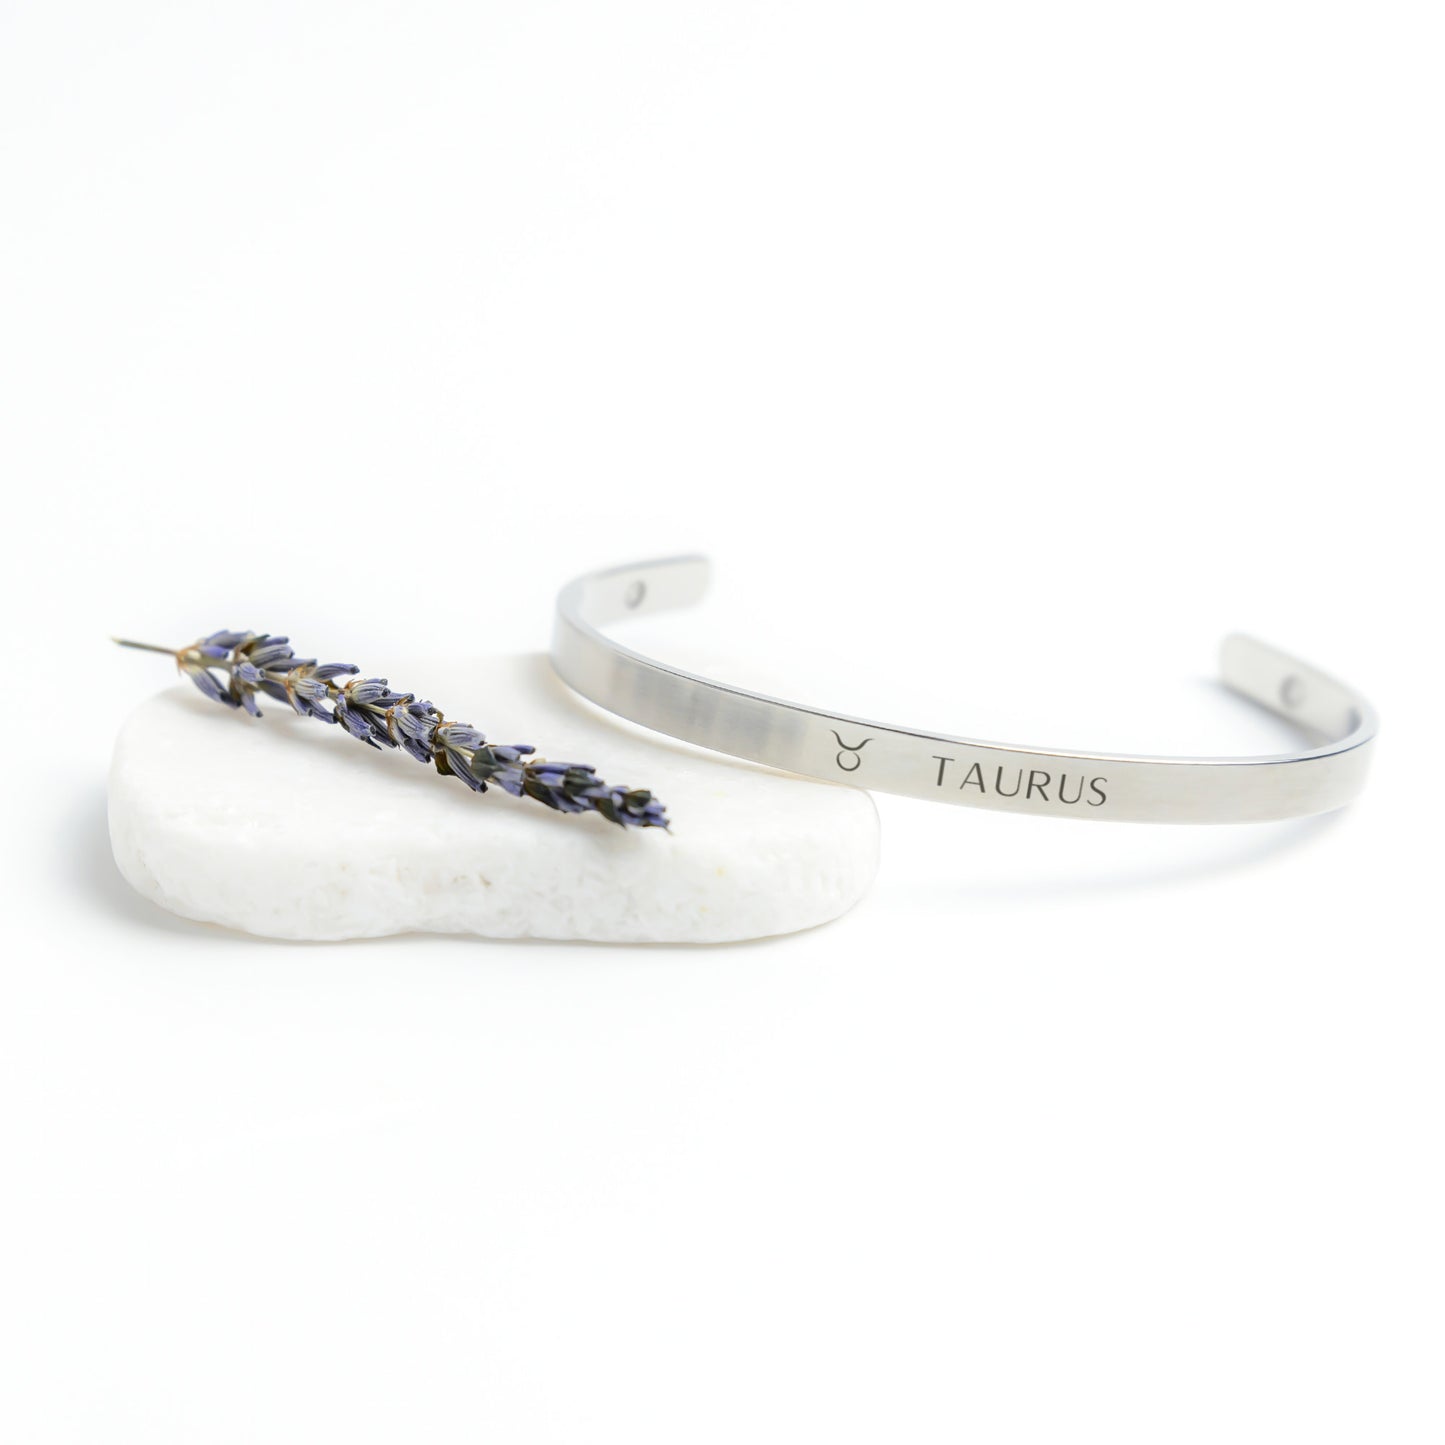 Taurus bracelet